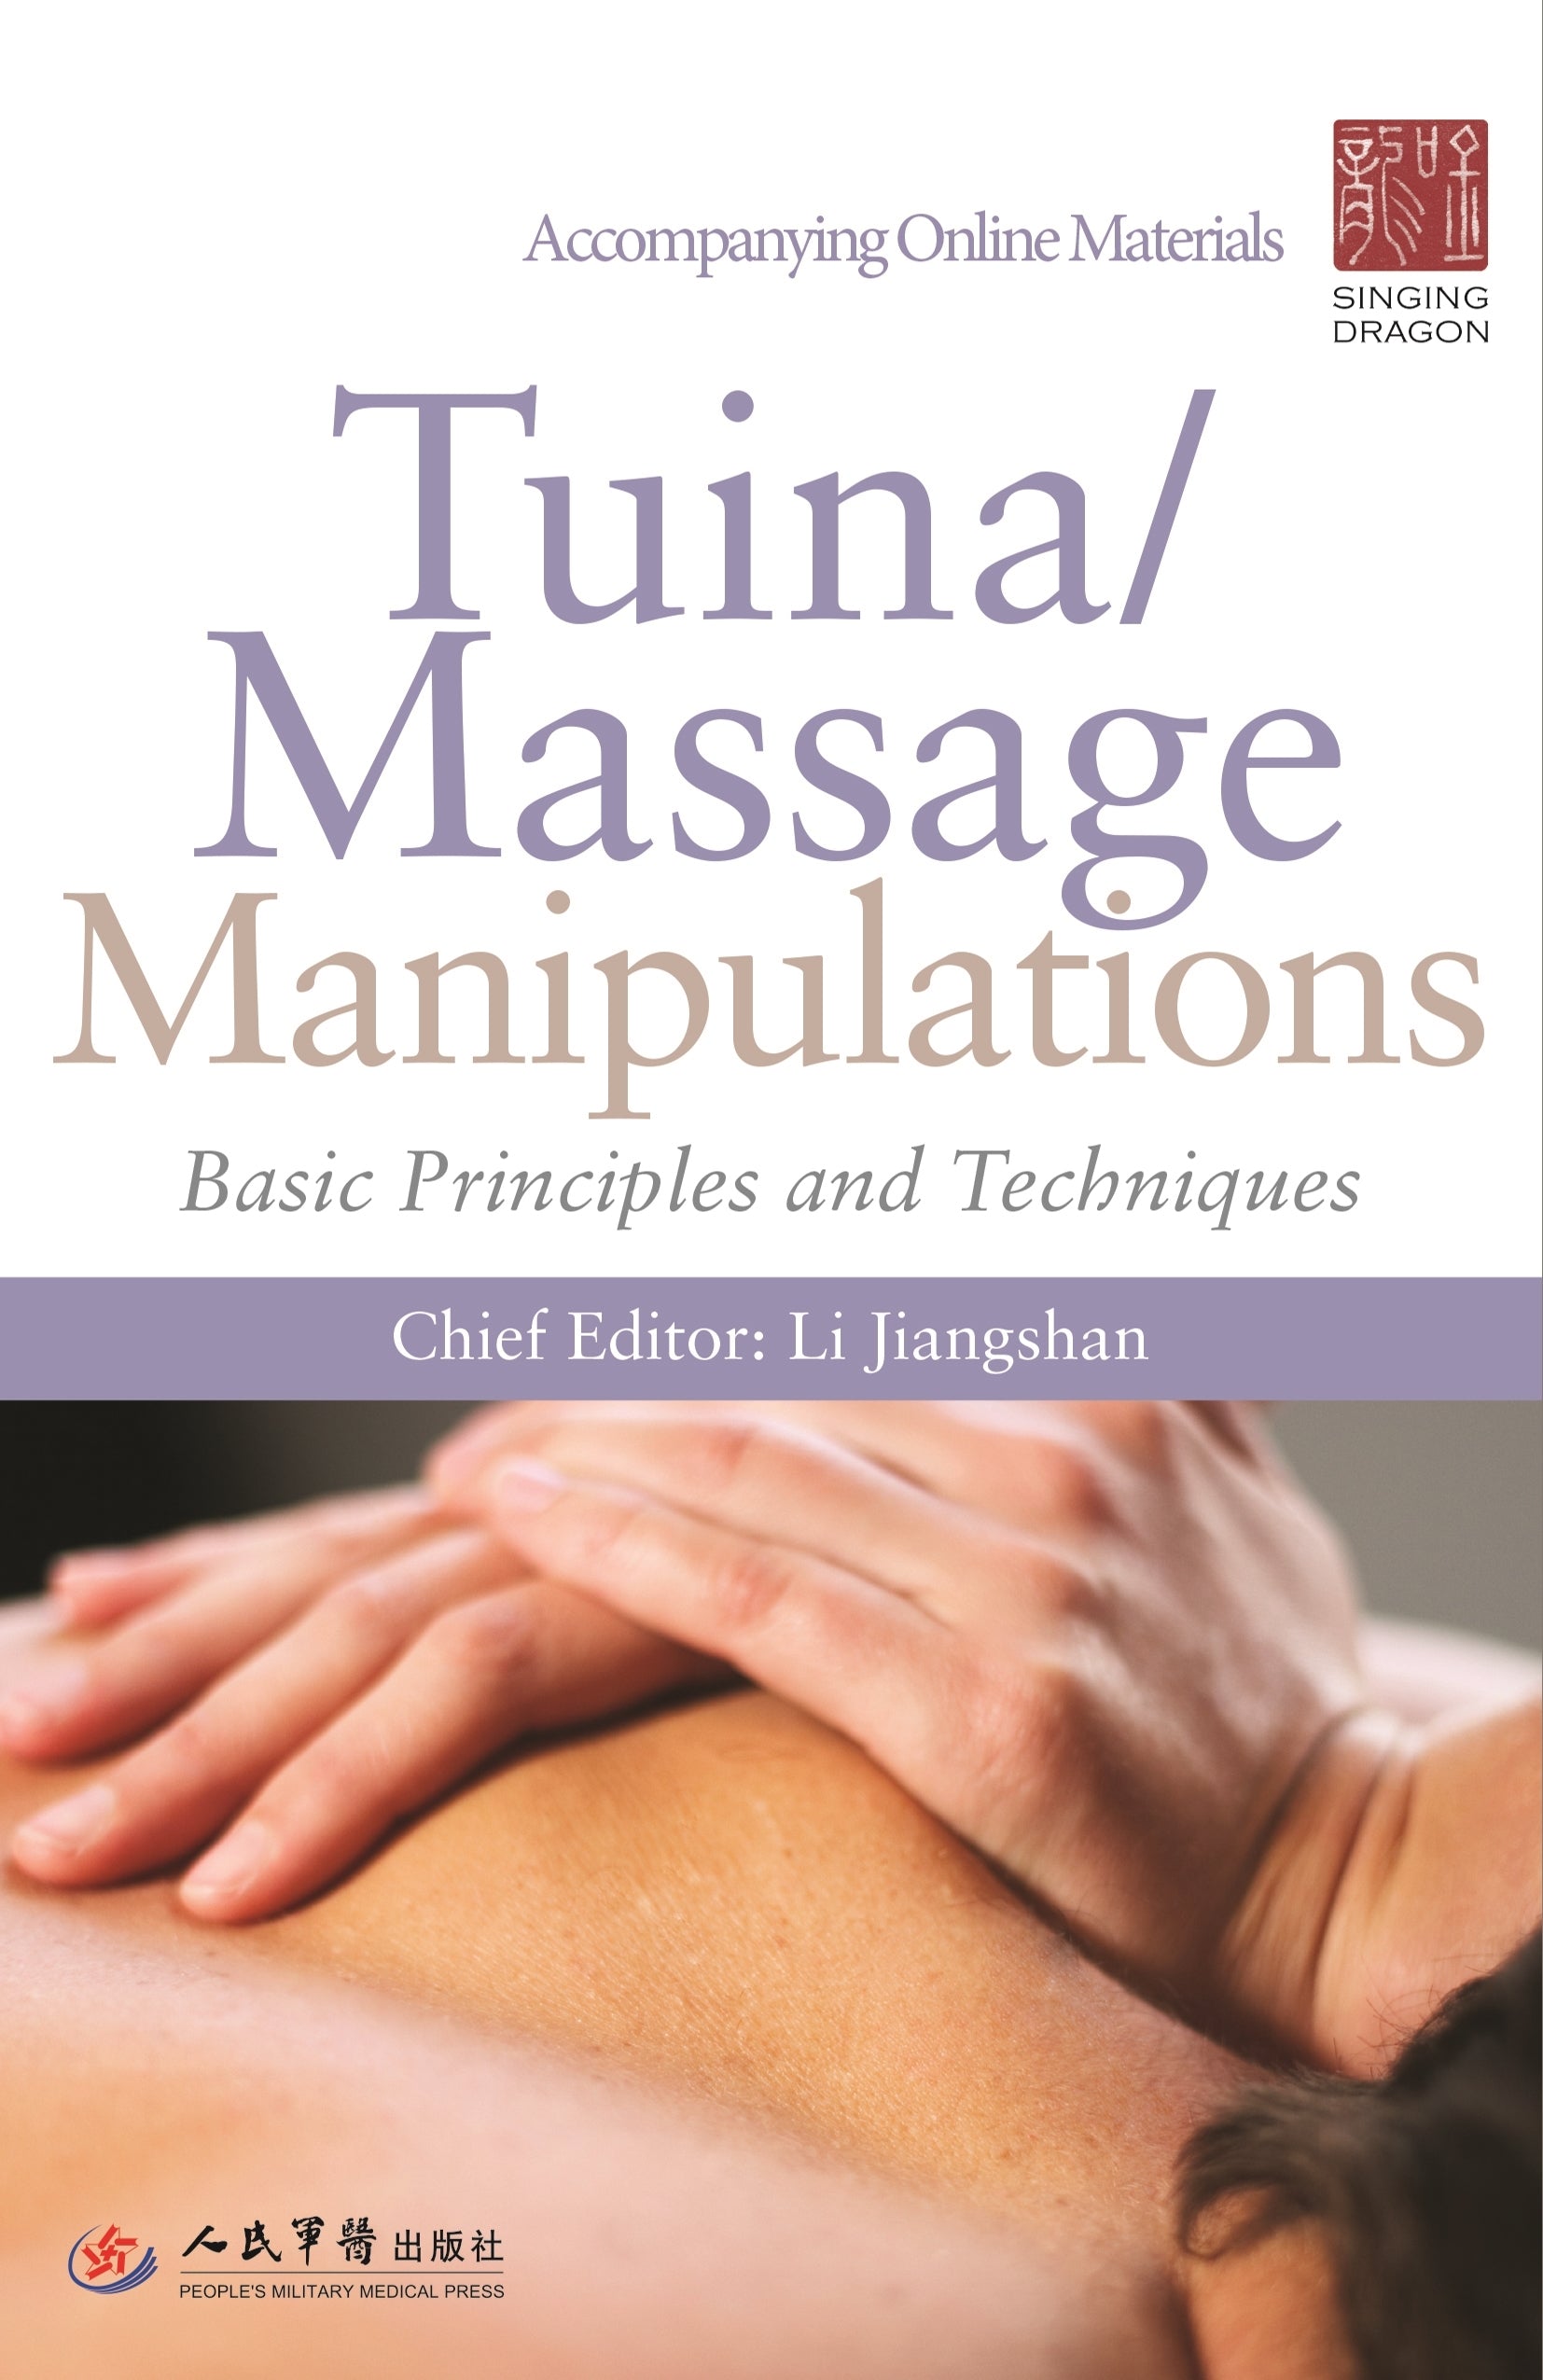 Tuina/ Massage Manipulations by Jiangshan Li, No Author Listed